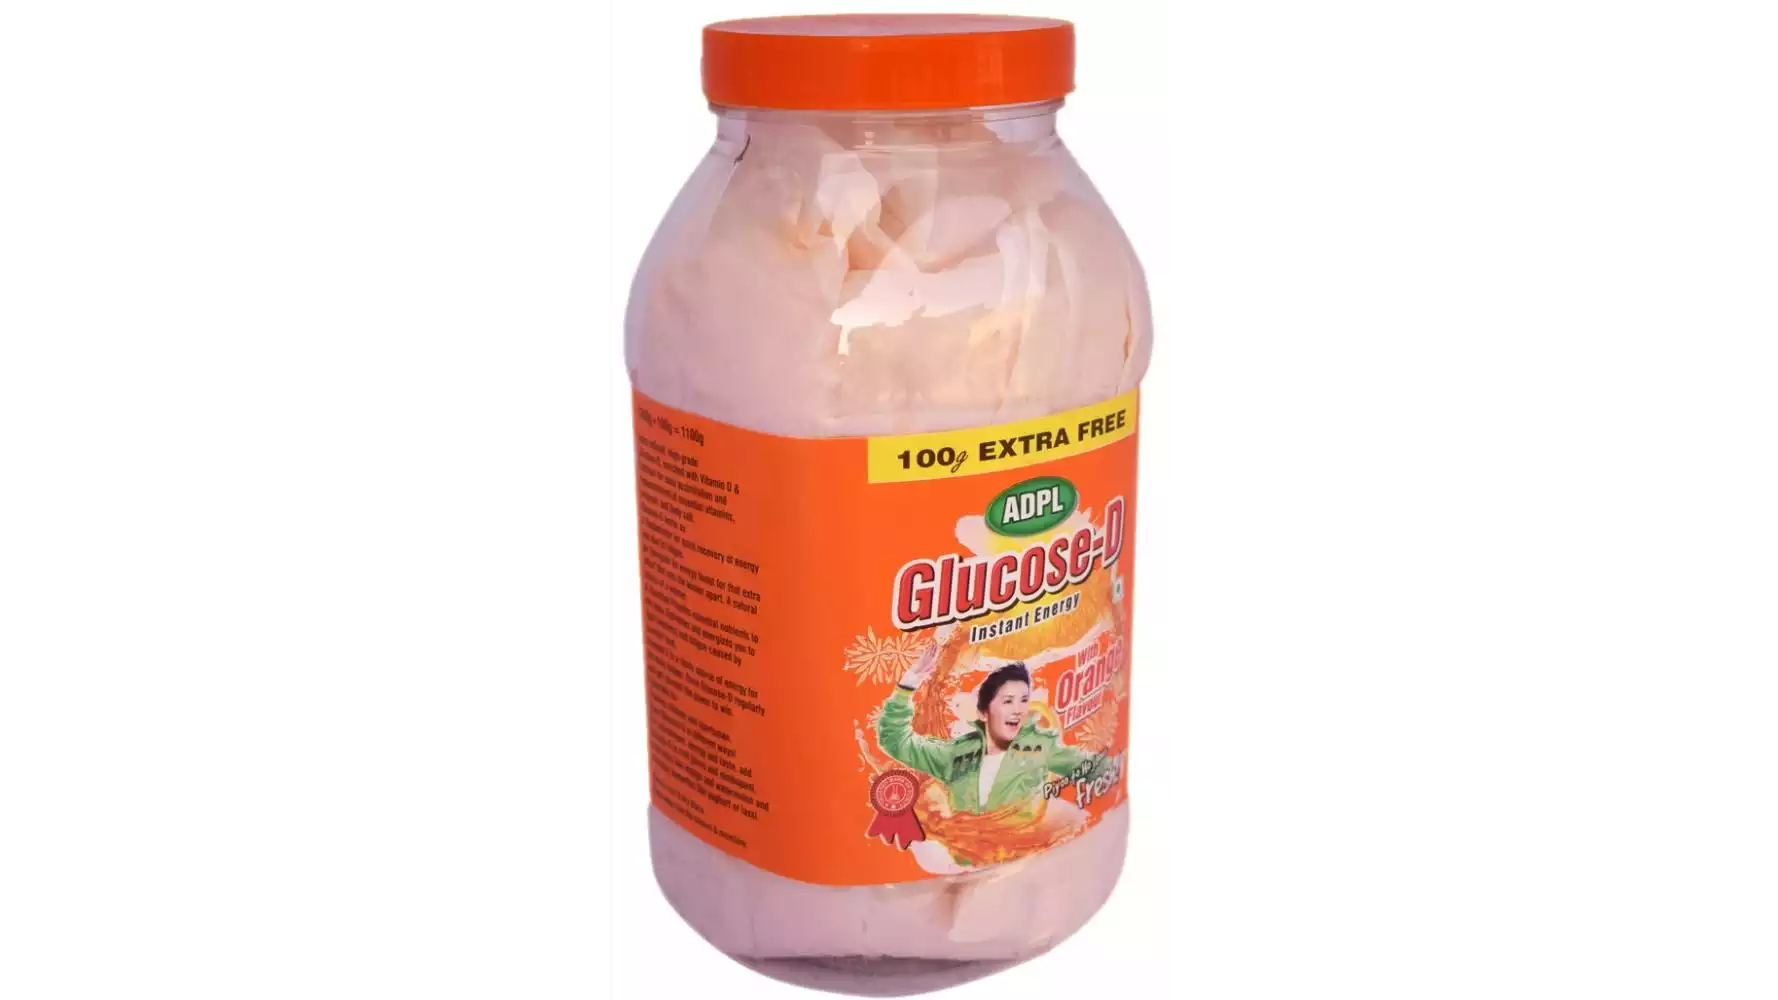 ADPL Glucose-D (Orange) (1100g)